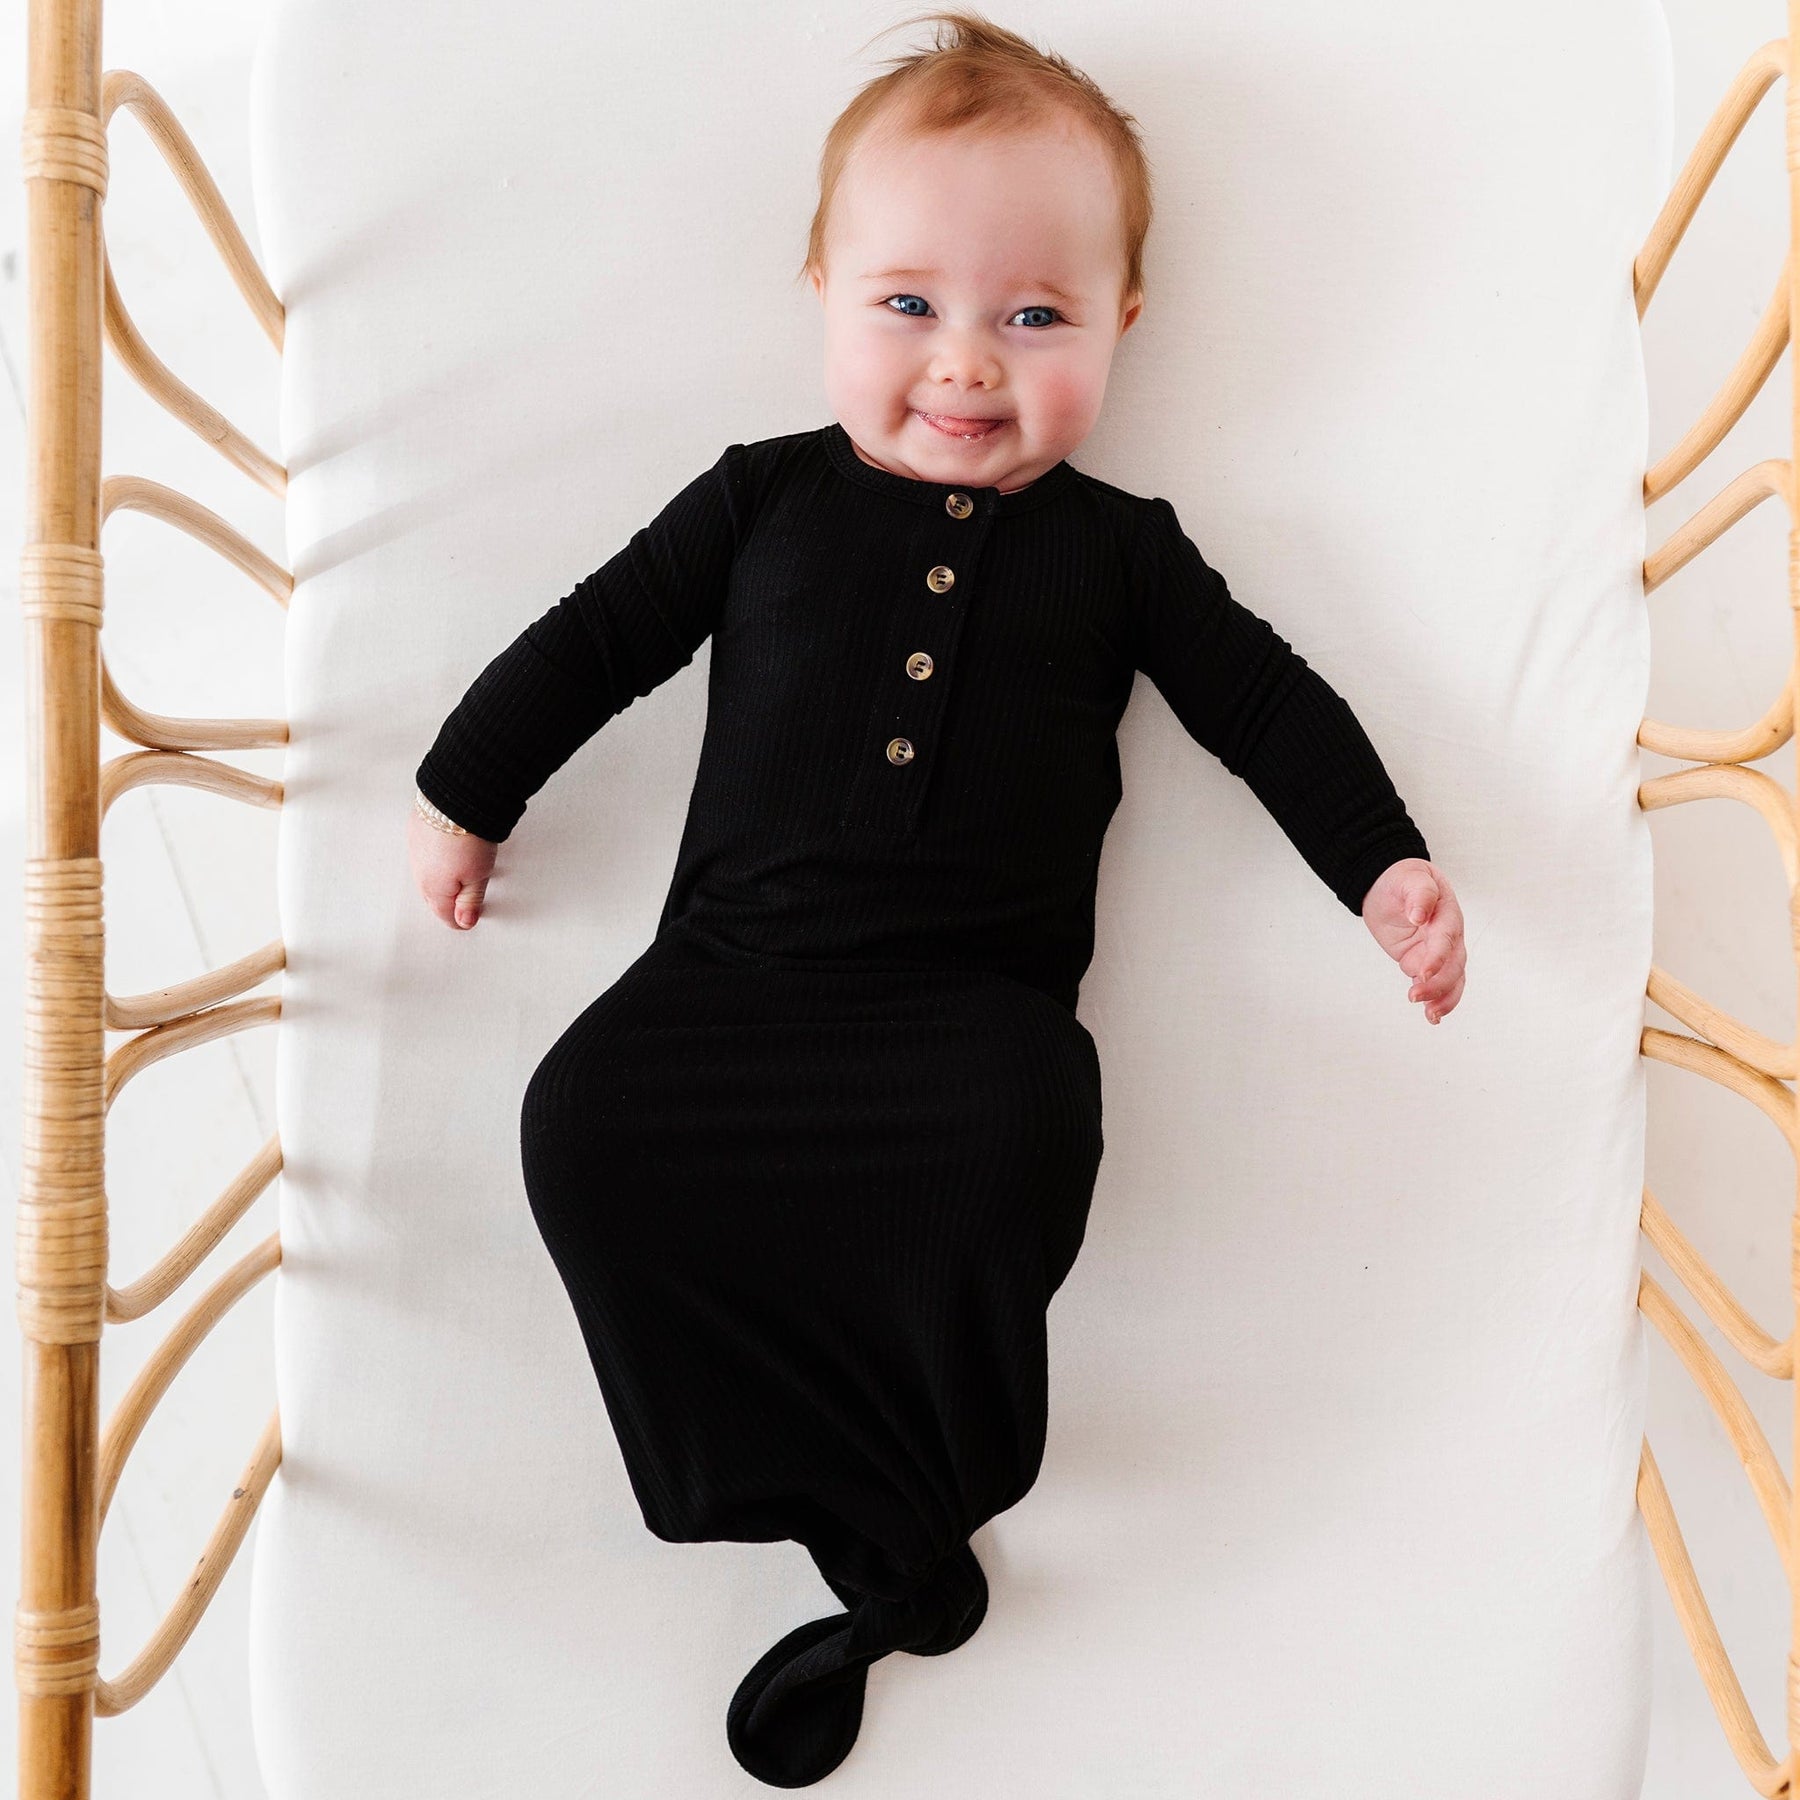 Buy Black Baby Gown online | Lazada.com.ph